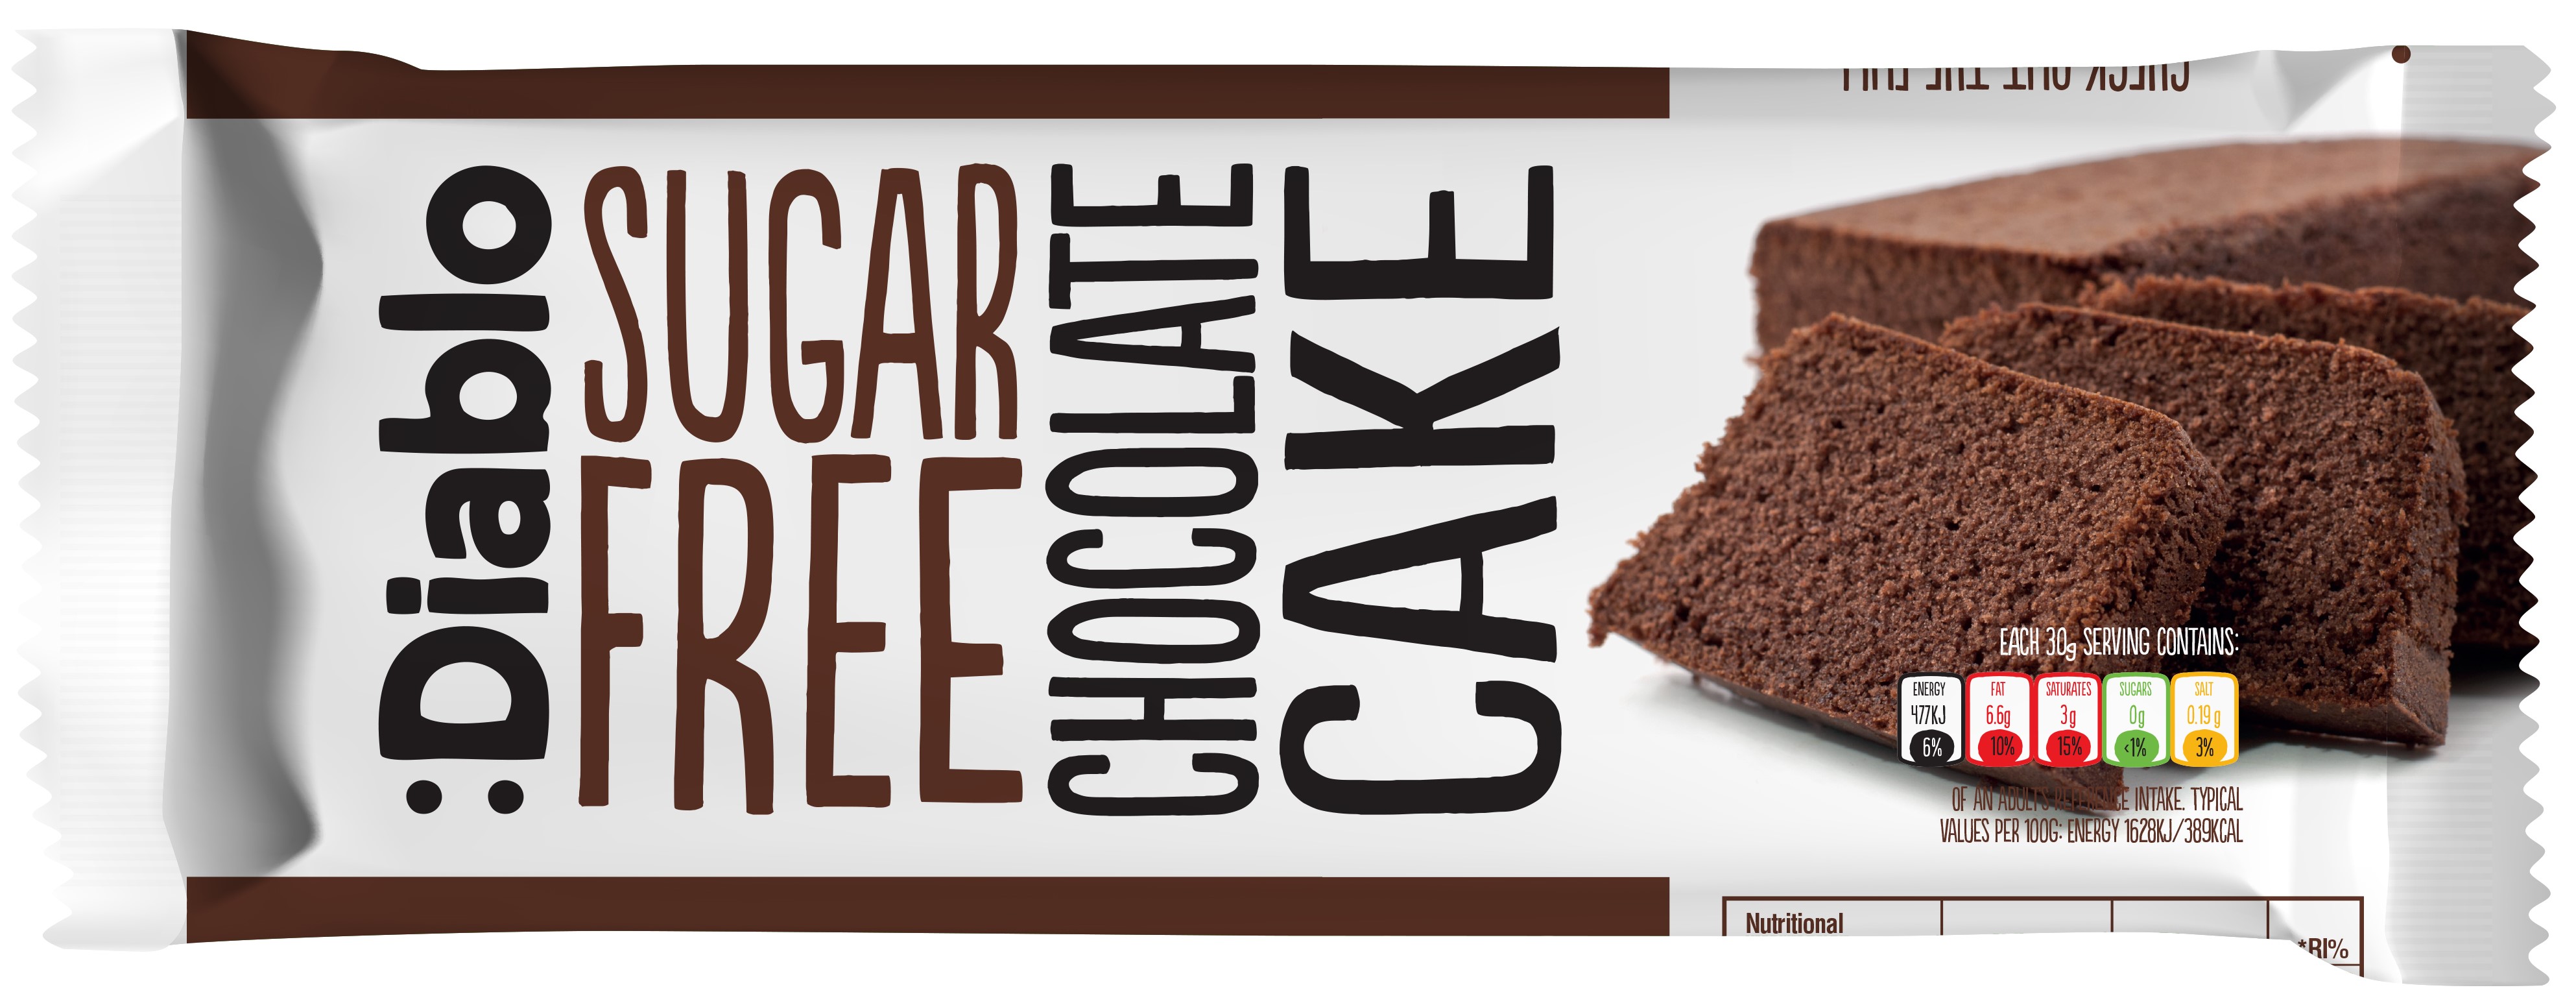 02005AA - Chocolate Cake Image